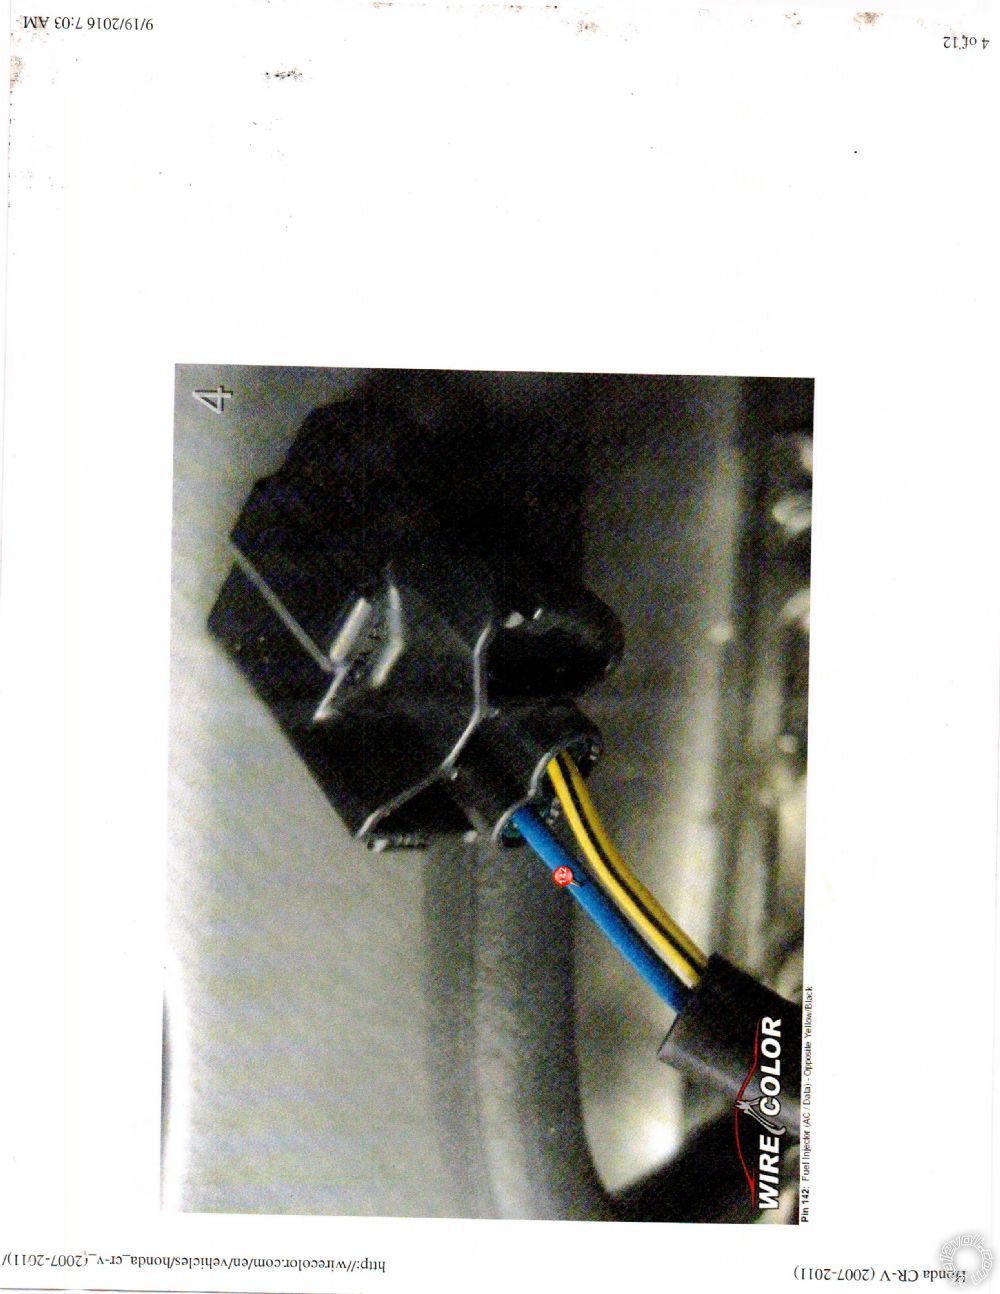 2007-2011 honda crv wiring -- posted image.